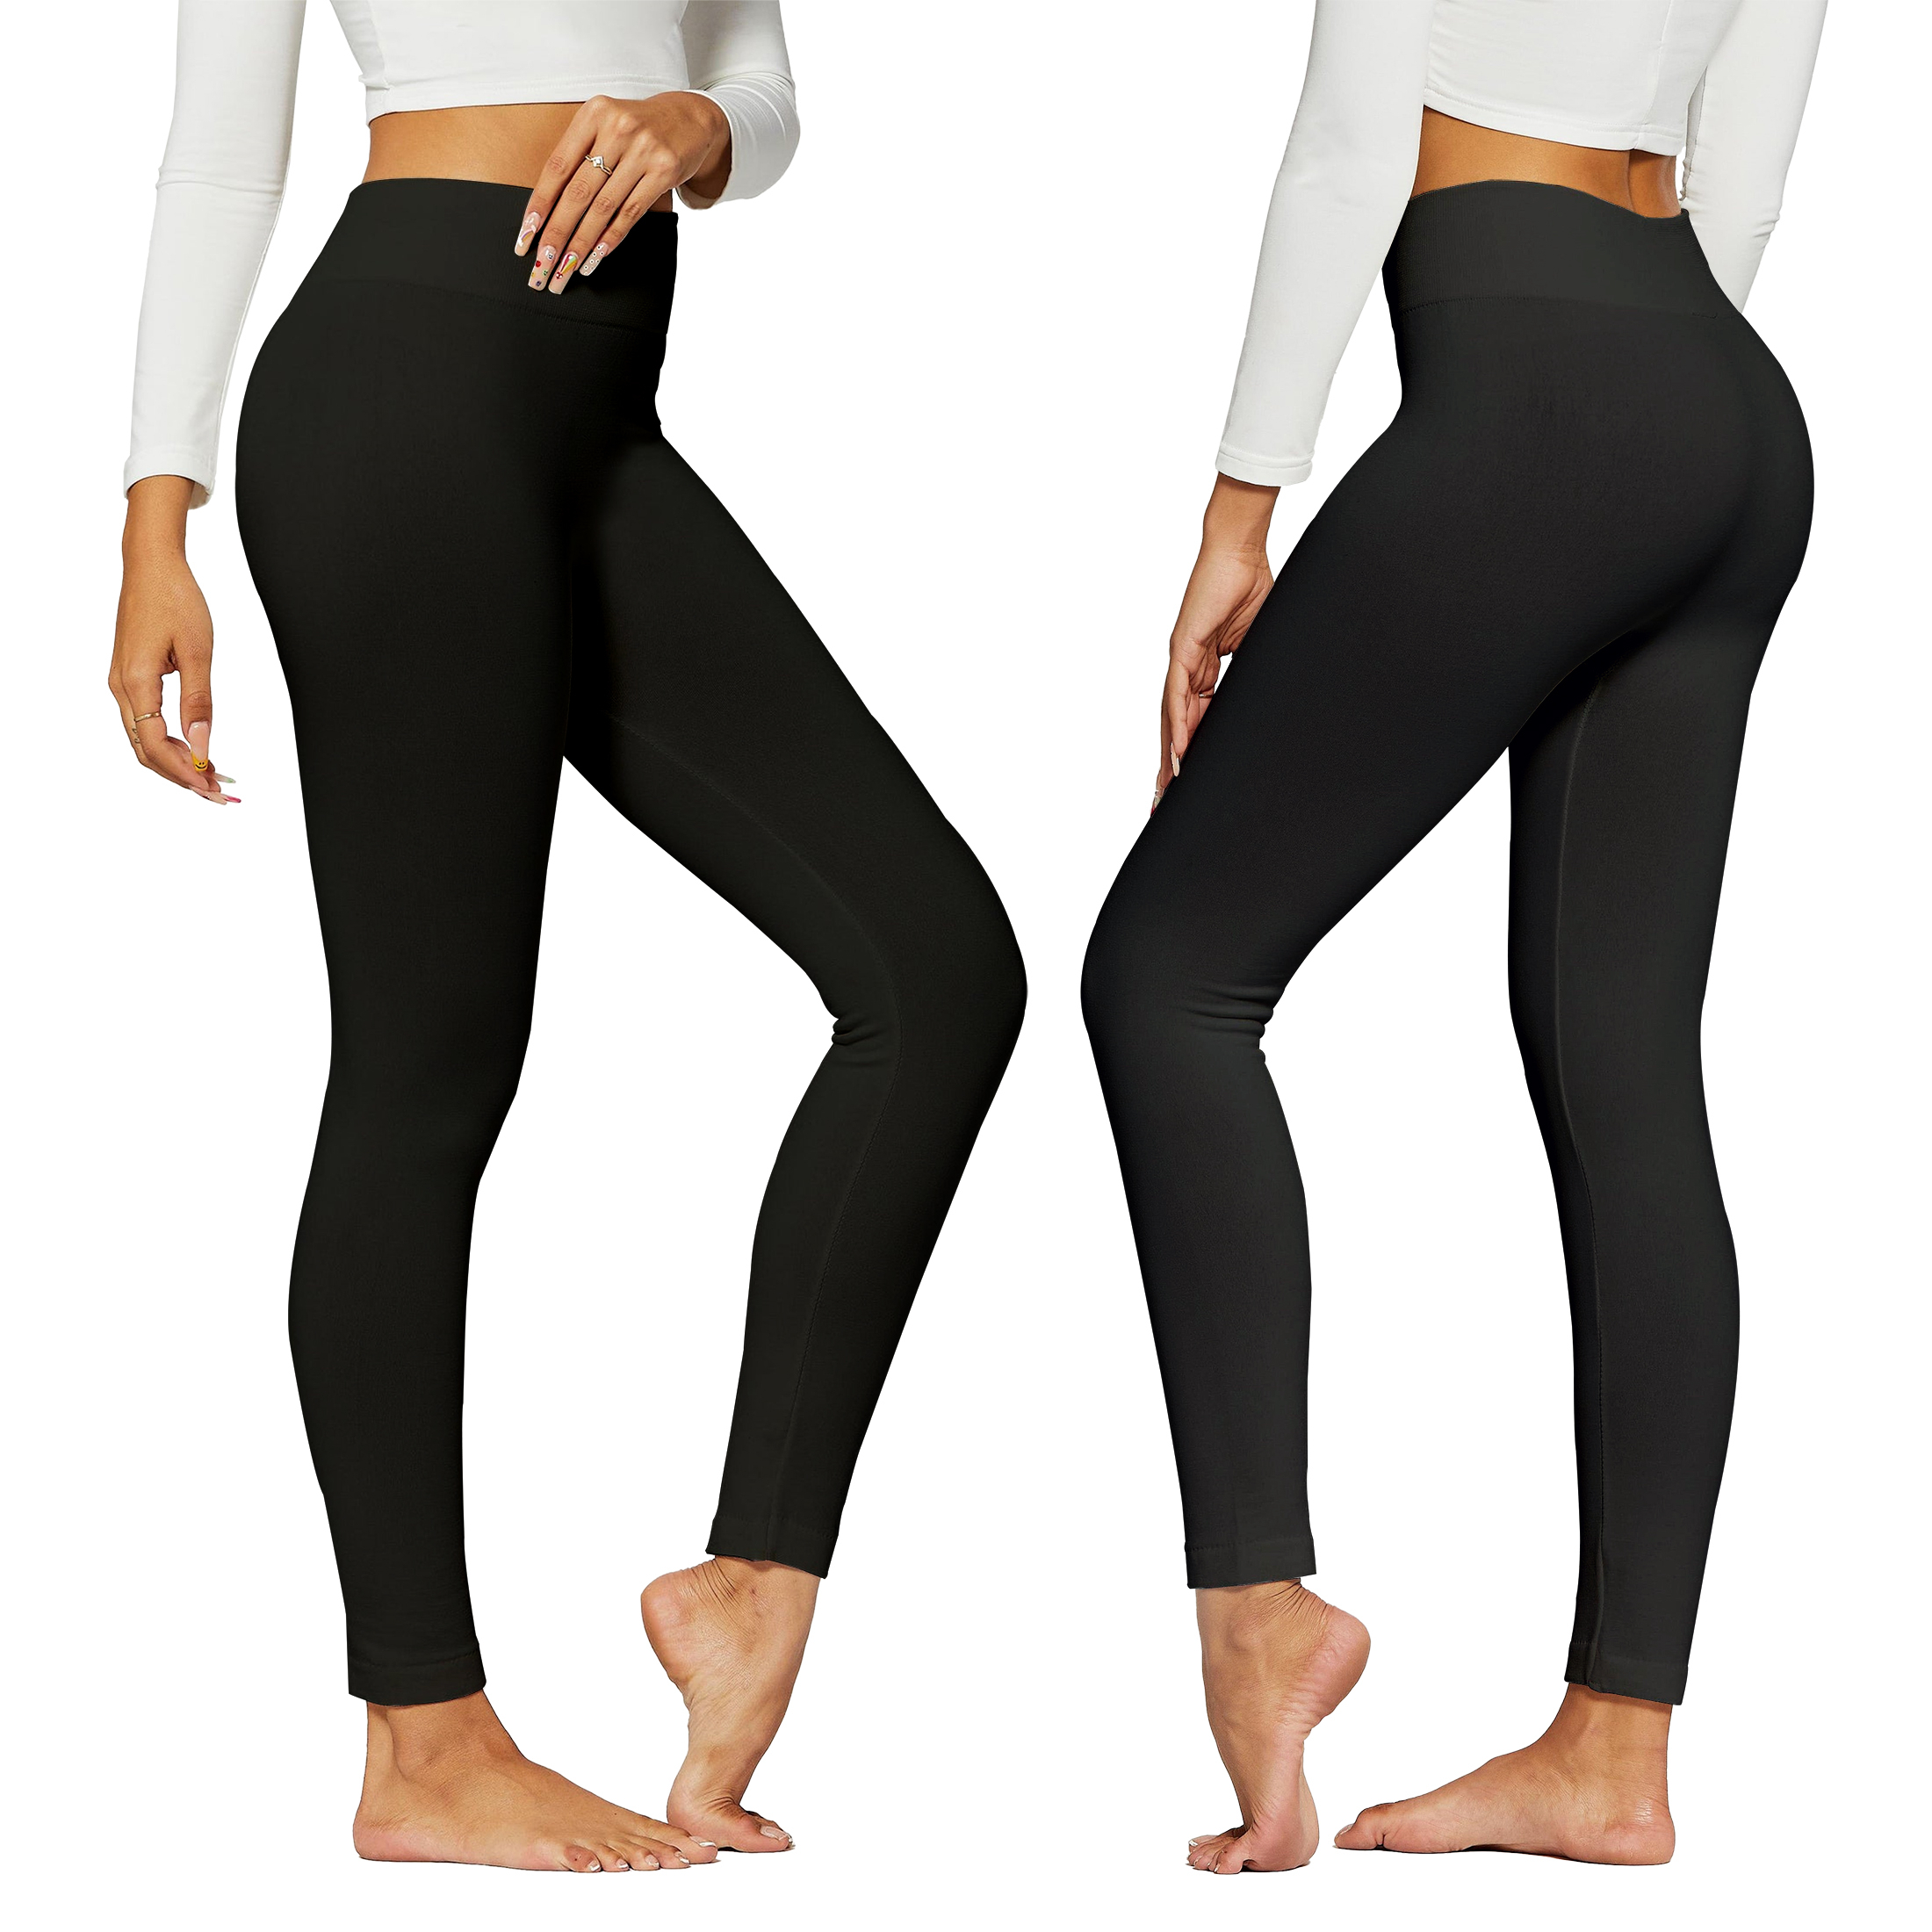 Women's Premium Quality High-Waist Fleece Lined Leggings (S-4X) - Black, Small/Medium